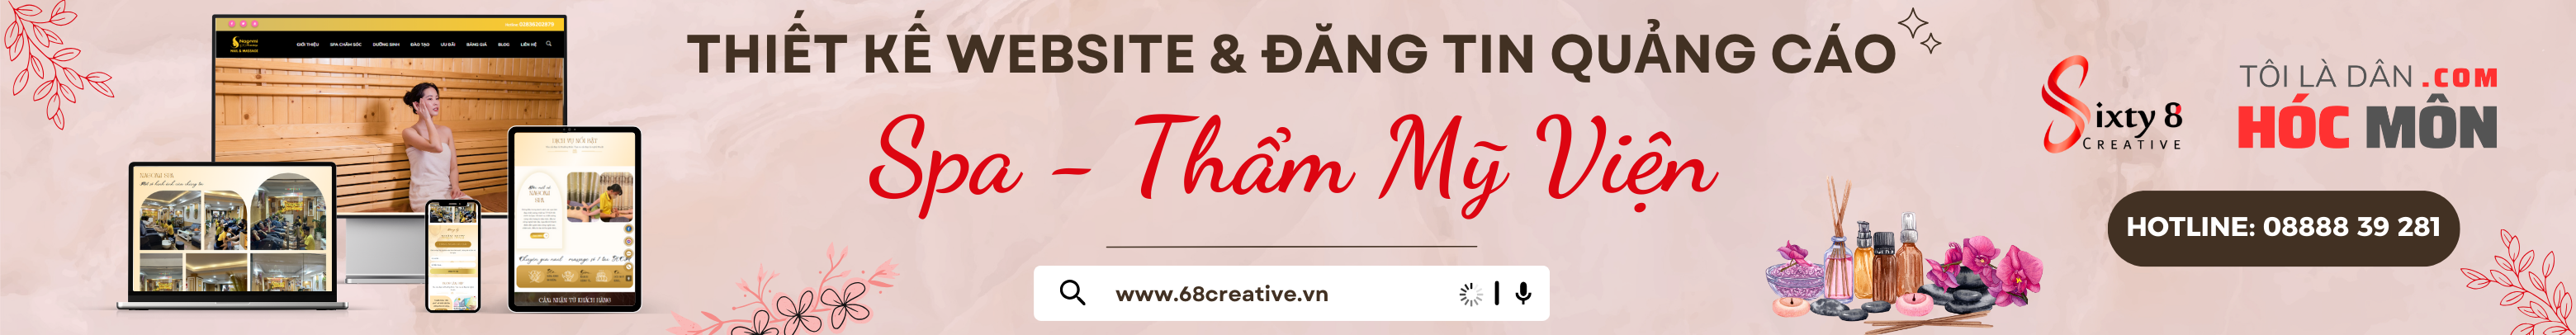 Thiết kế website 68Creative.vn